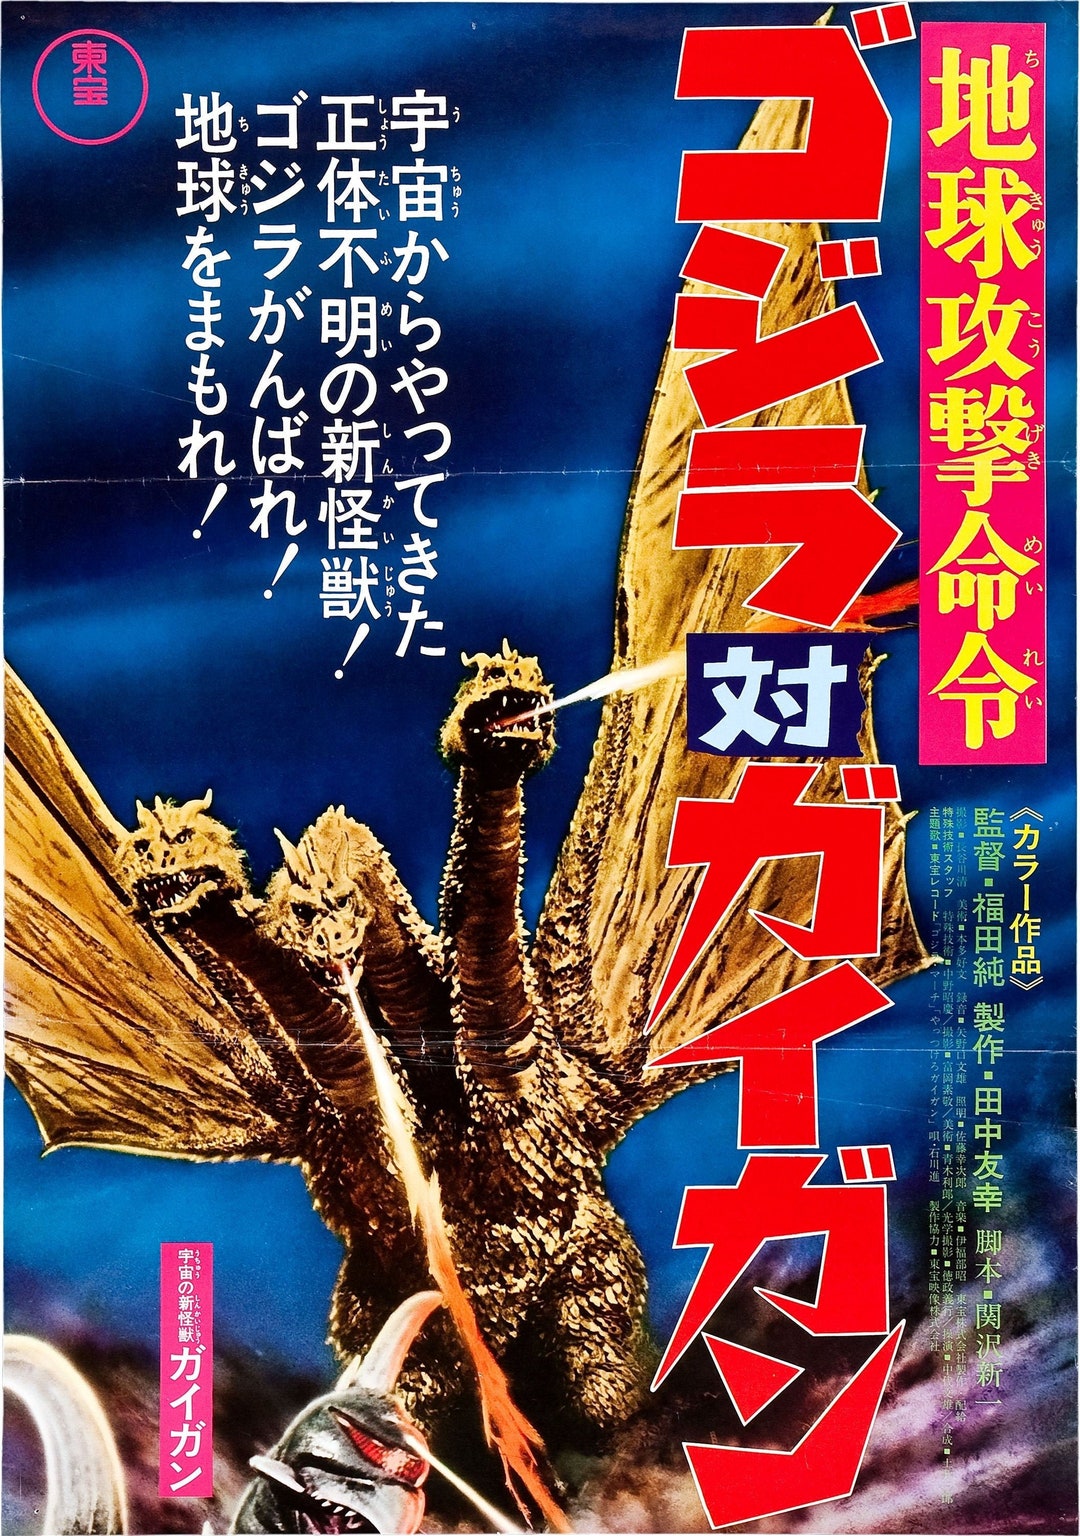 Godzilla Vs Gigan Deluxe 11 X 17 Poster Art - Etsy Israel